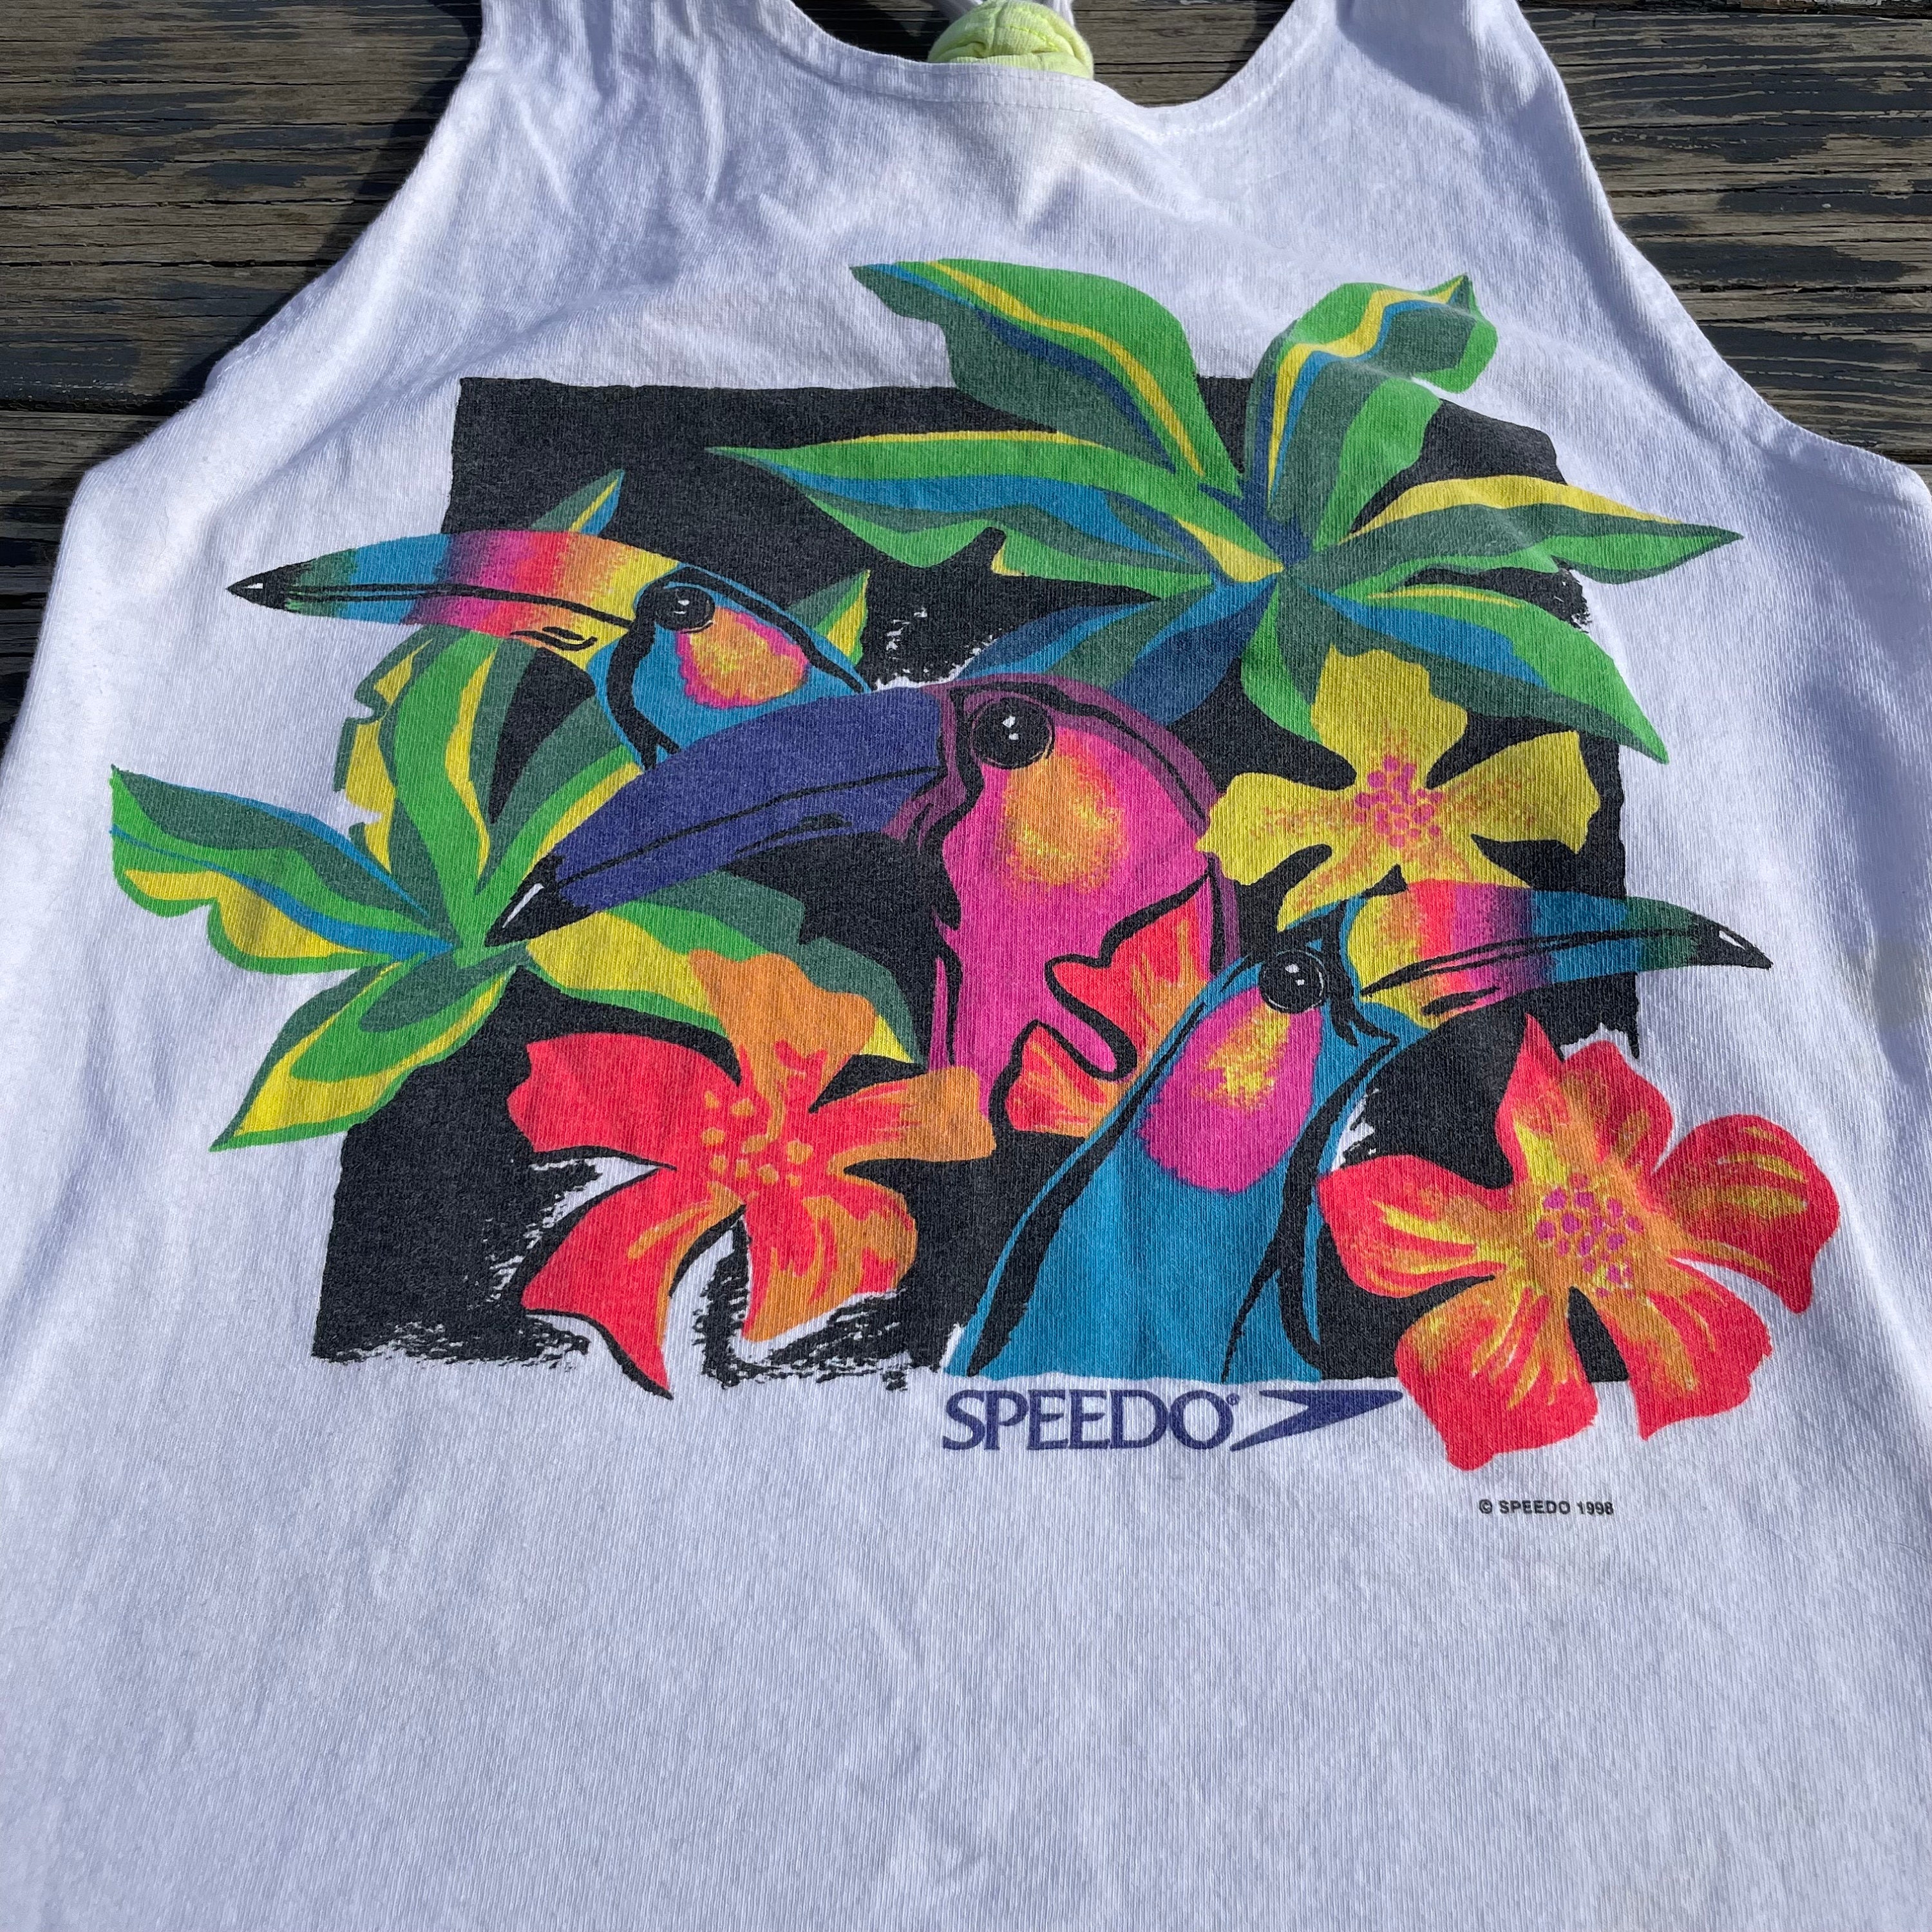 Vintage 90s Speedo Stringer Tank Top Tropical Bird Print Graphic Beach Wear Youth L Adult S